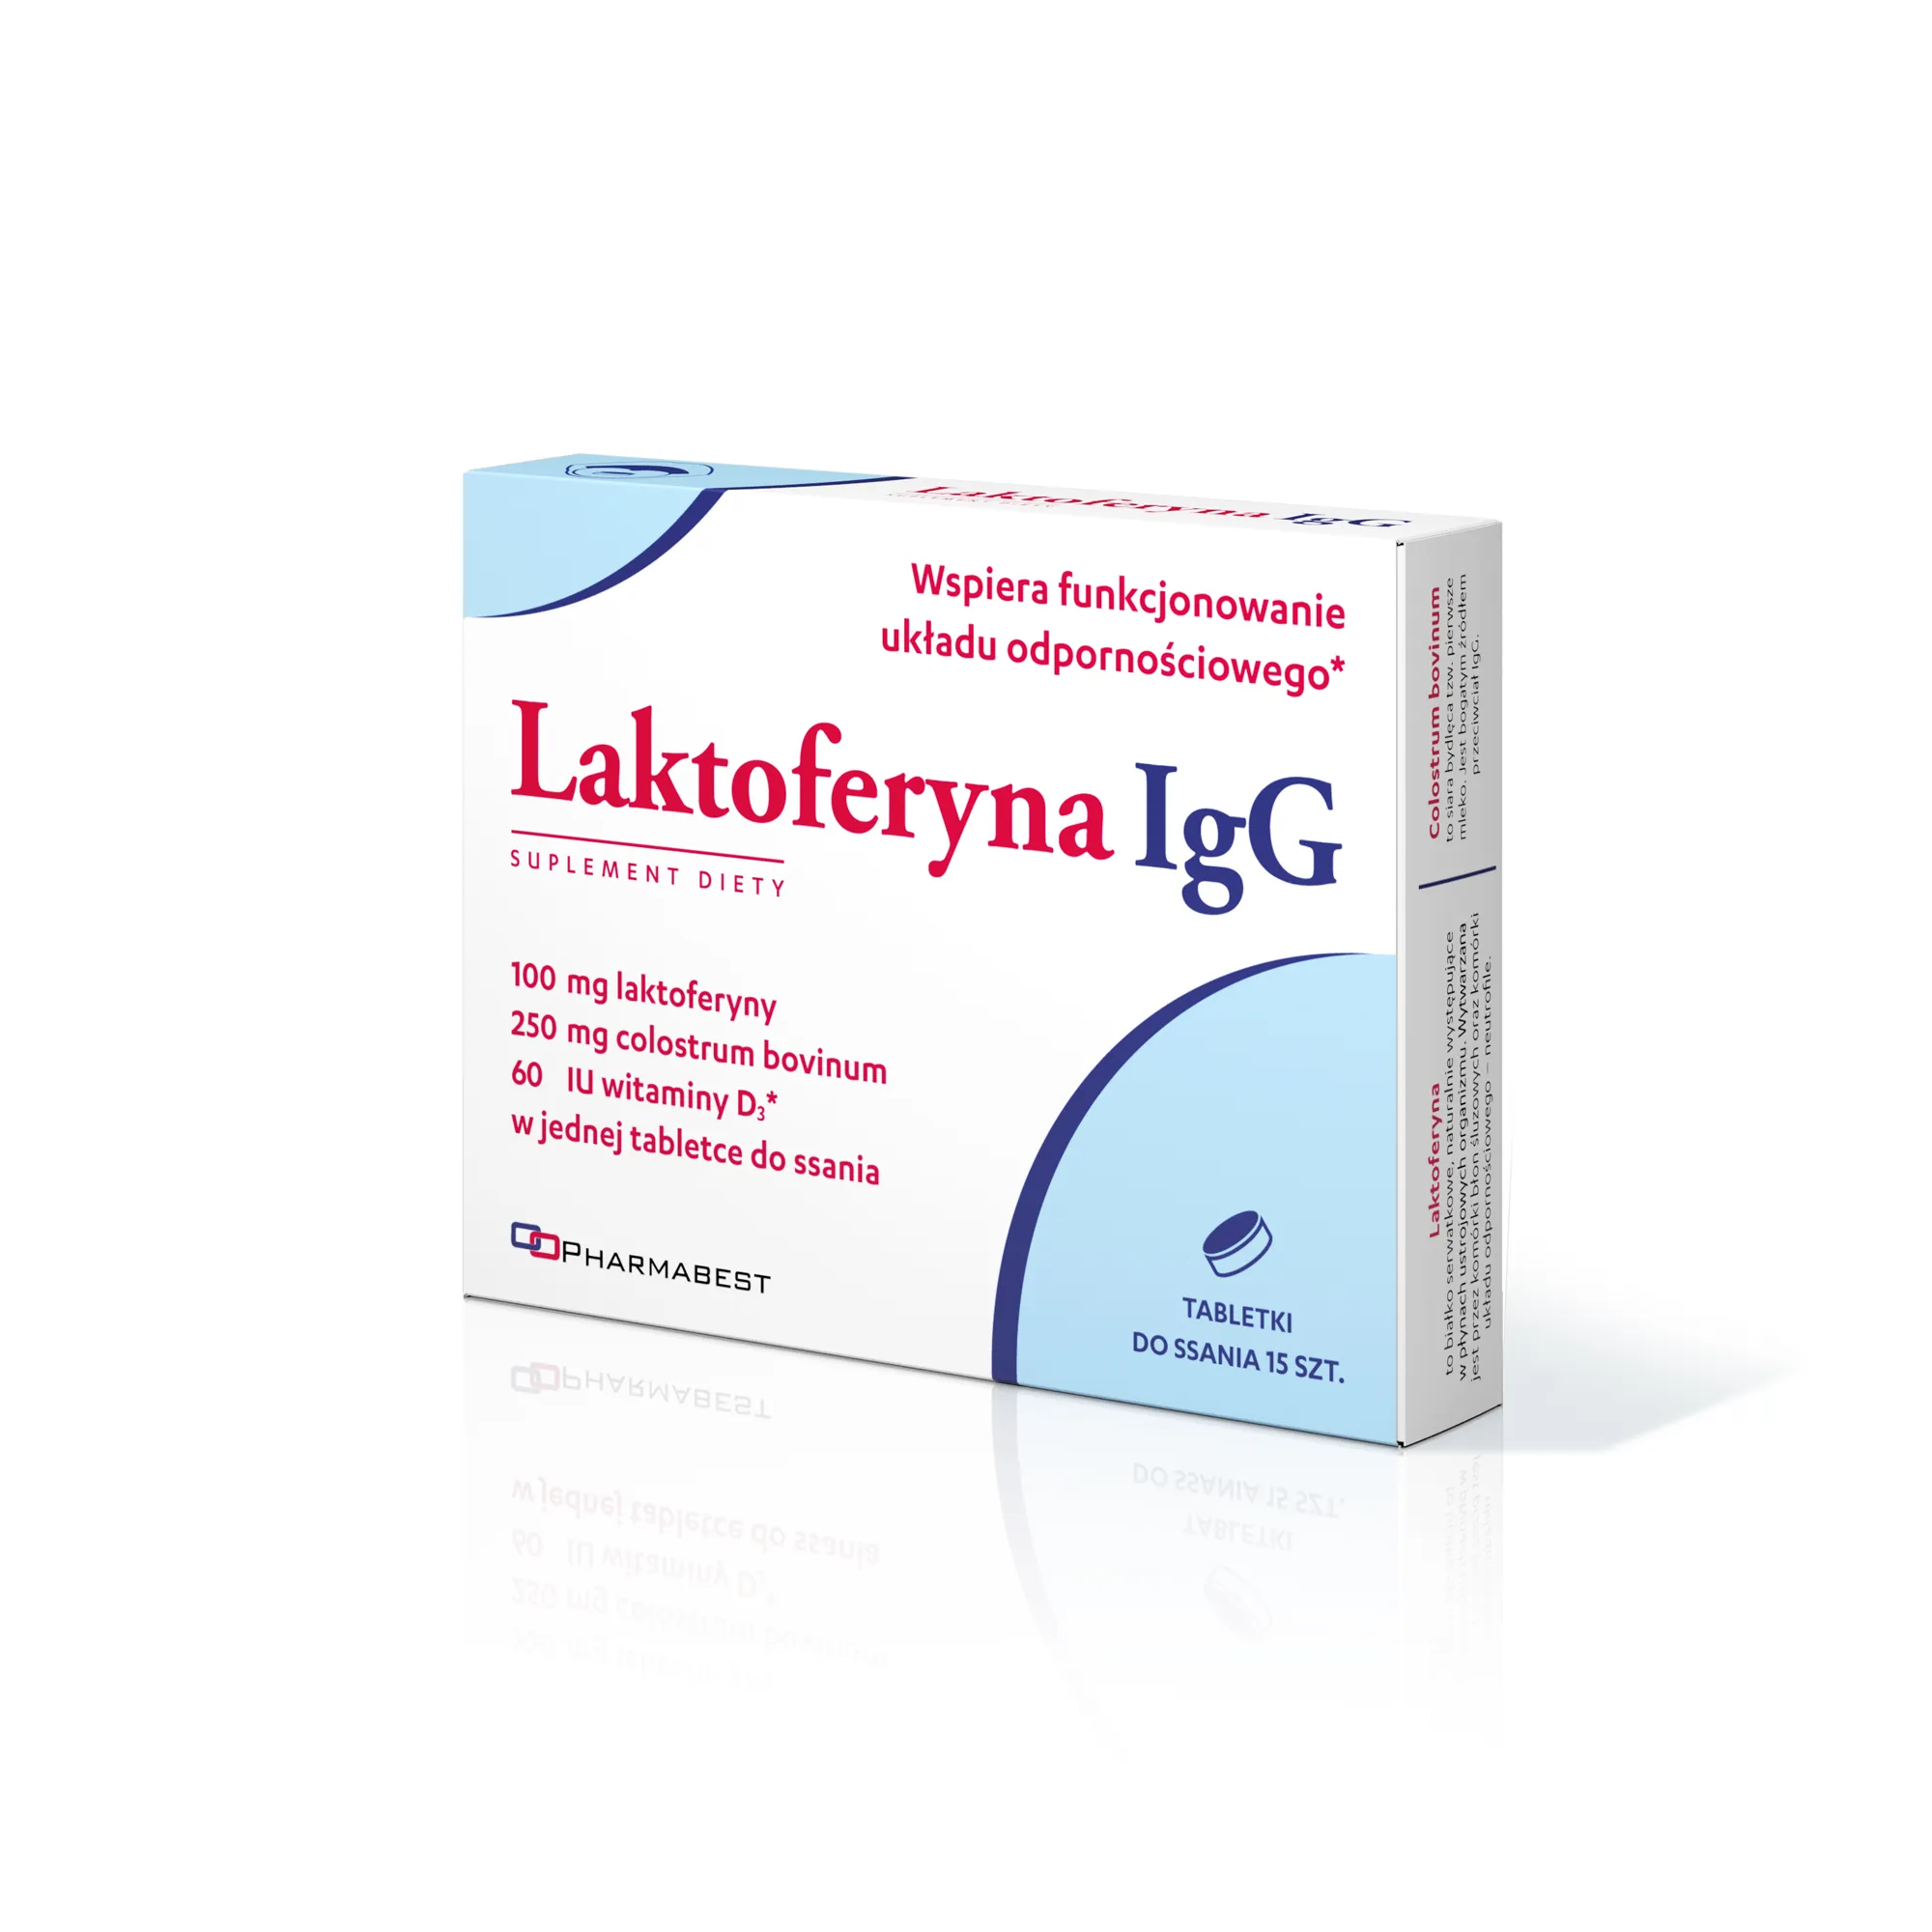 Laktoferyna IgG, 15 tabletek do ssania